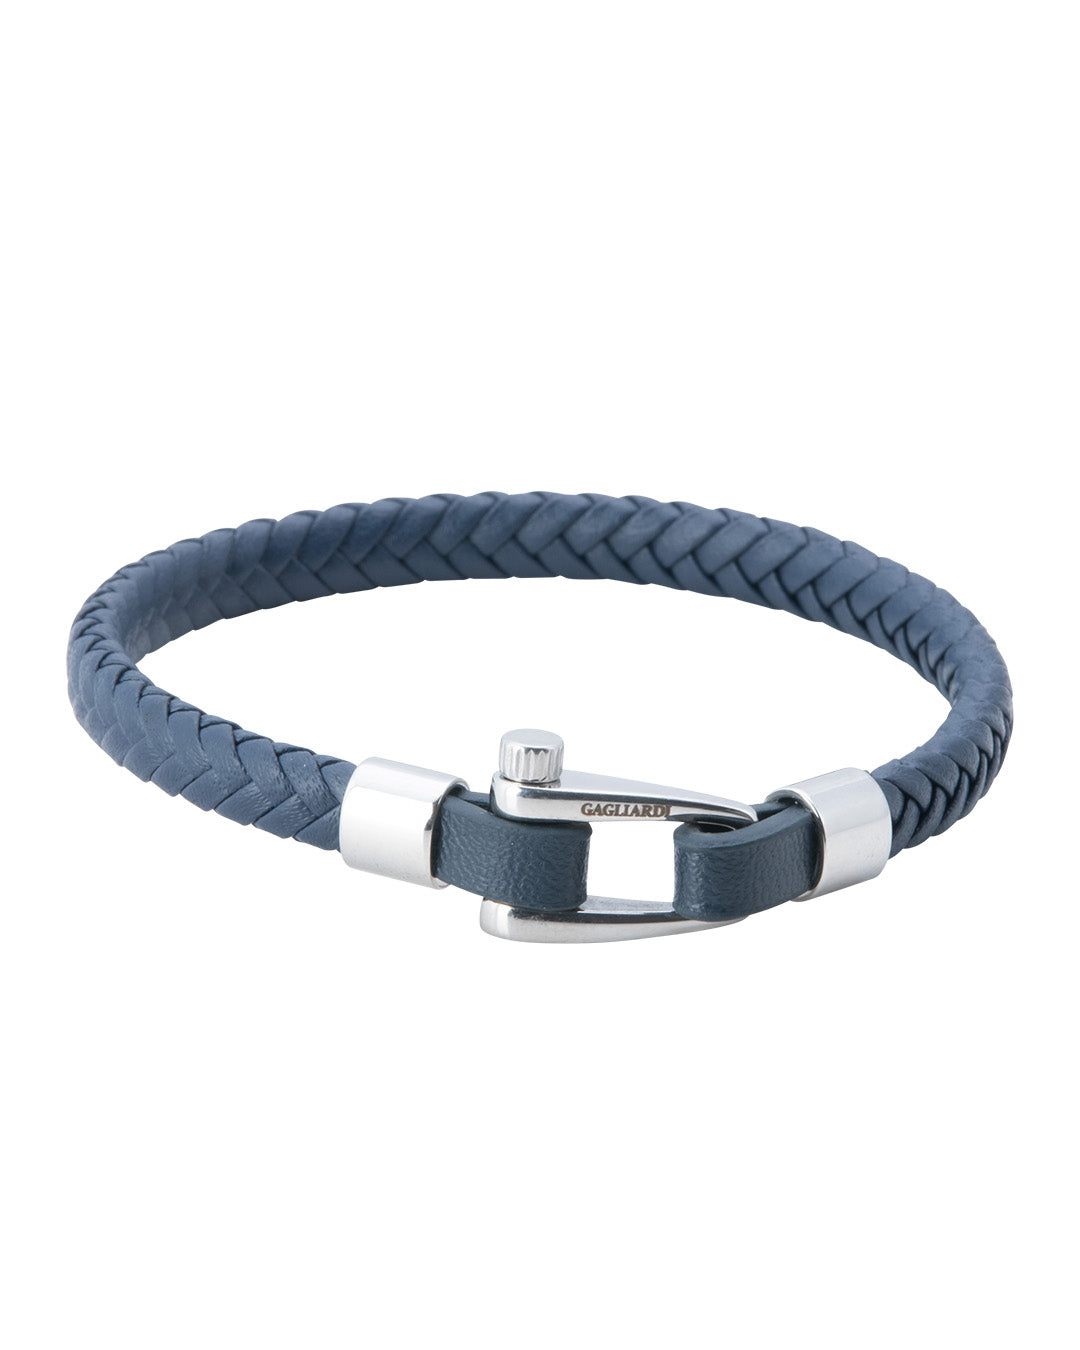 Navy Braided Leather Bracelet With Polished Steel Screw Clasp